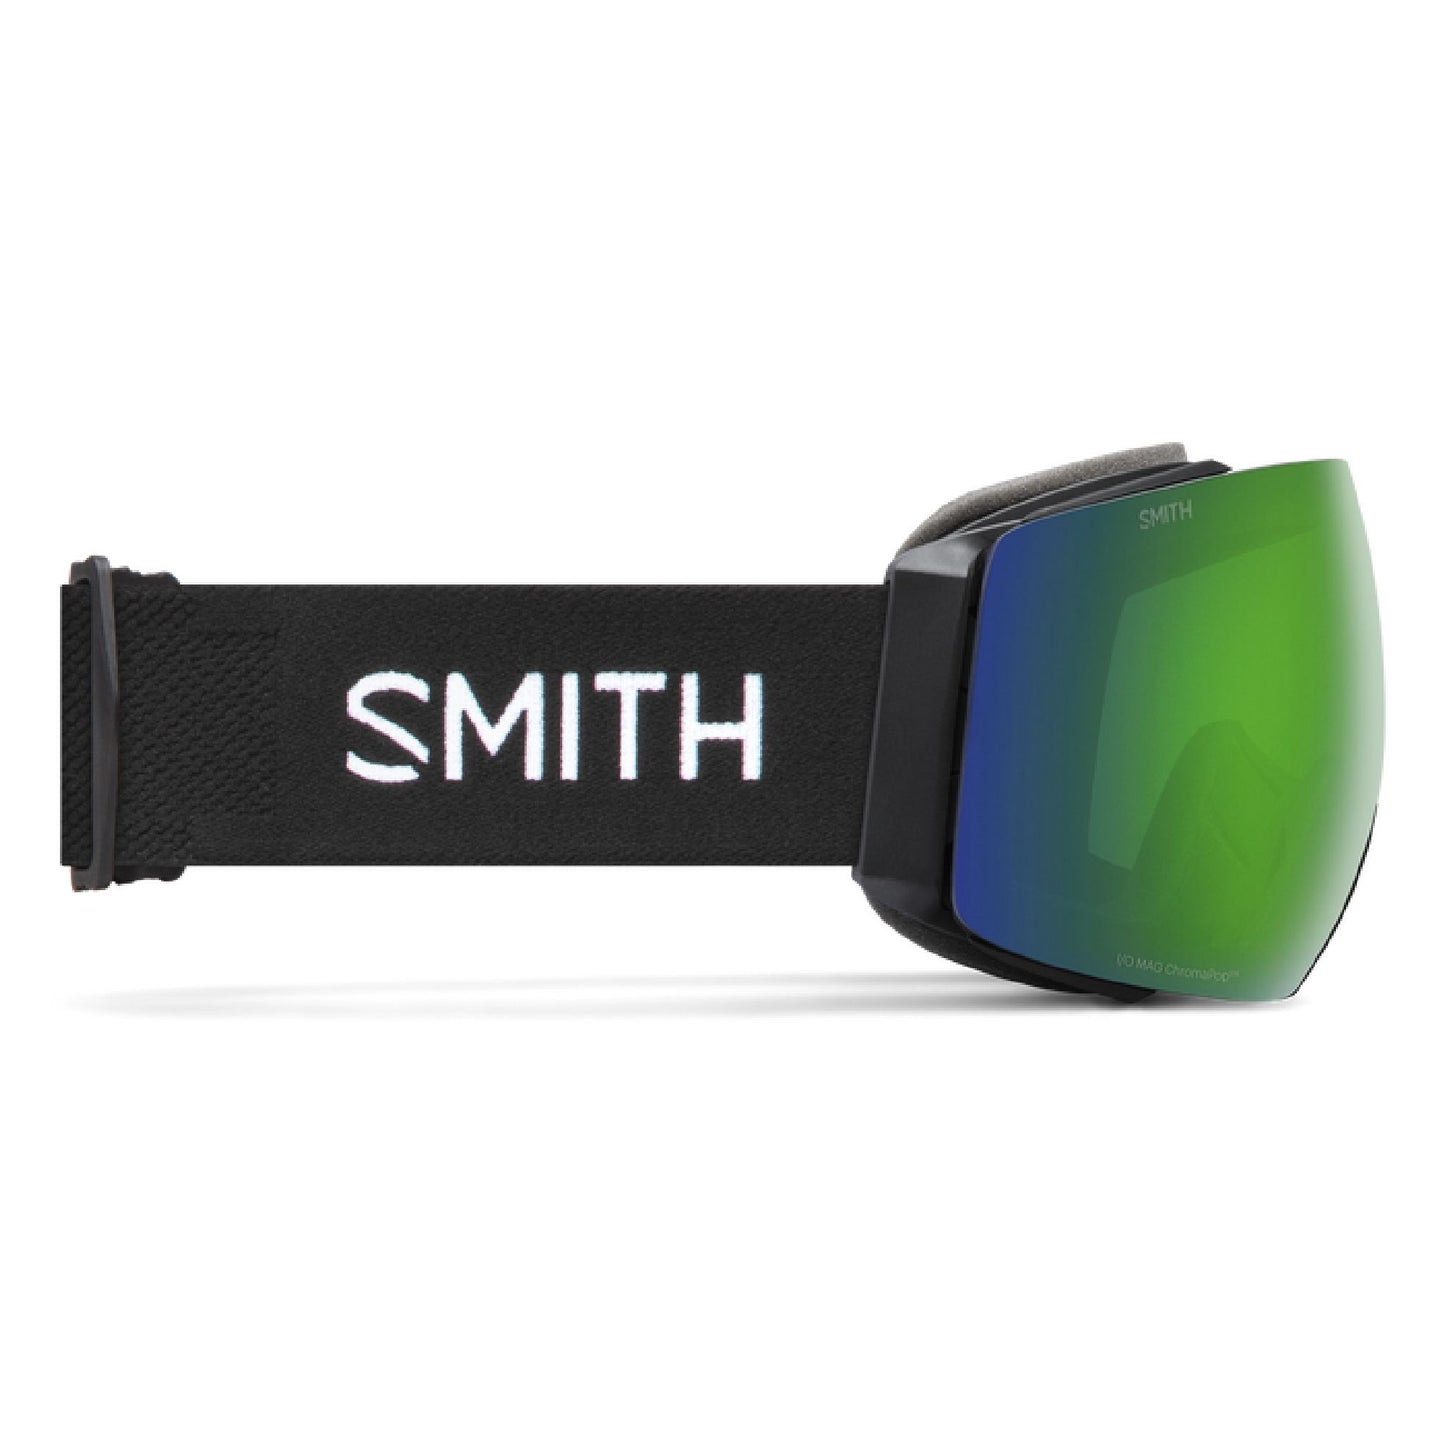 Smith I/O MAG Snow Goggle Black / ChromaPop Sun Green Mirror Snow Goggles